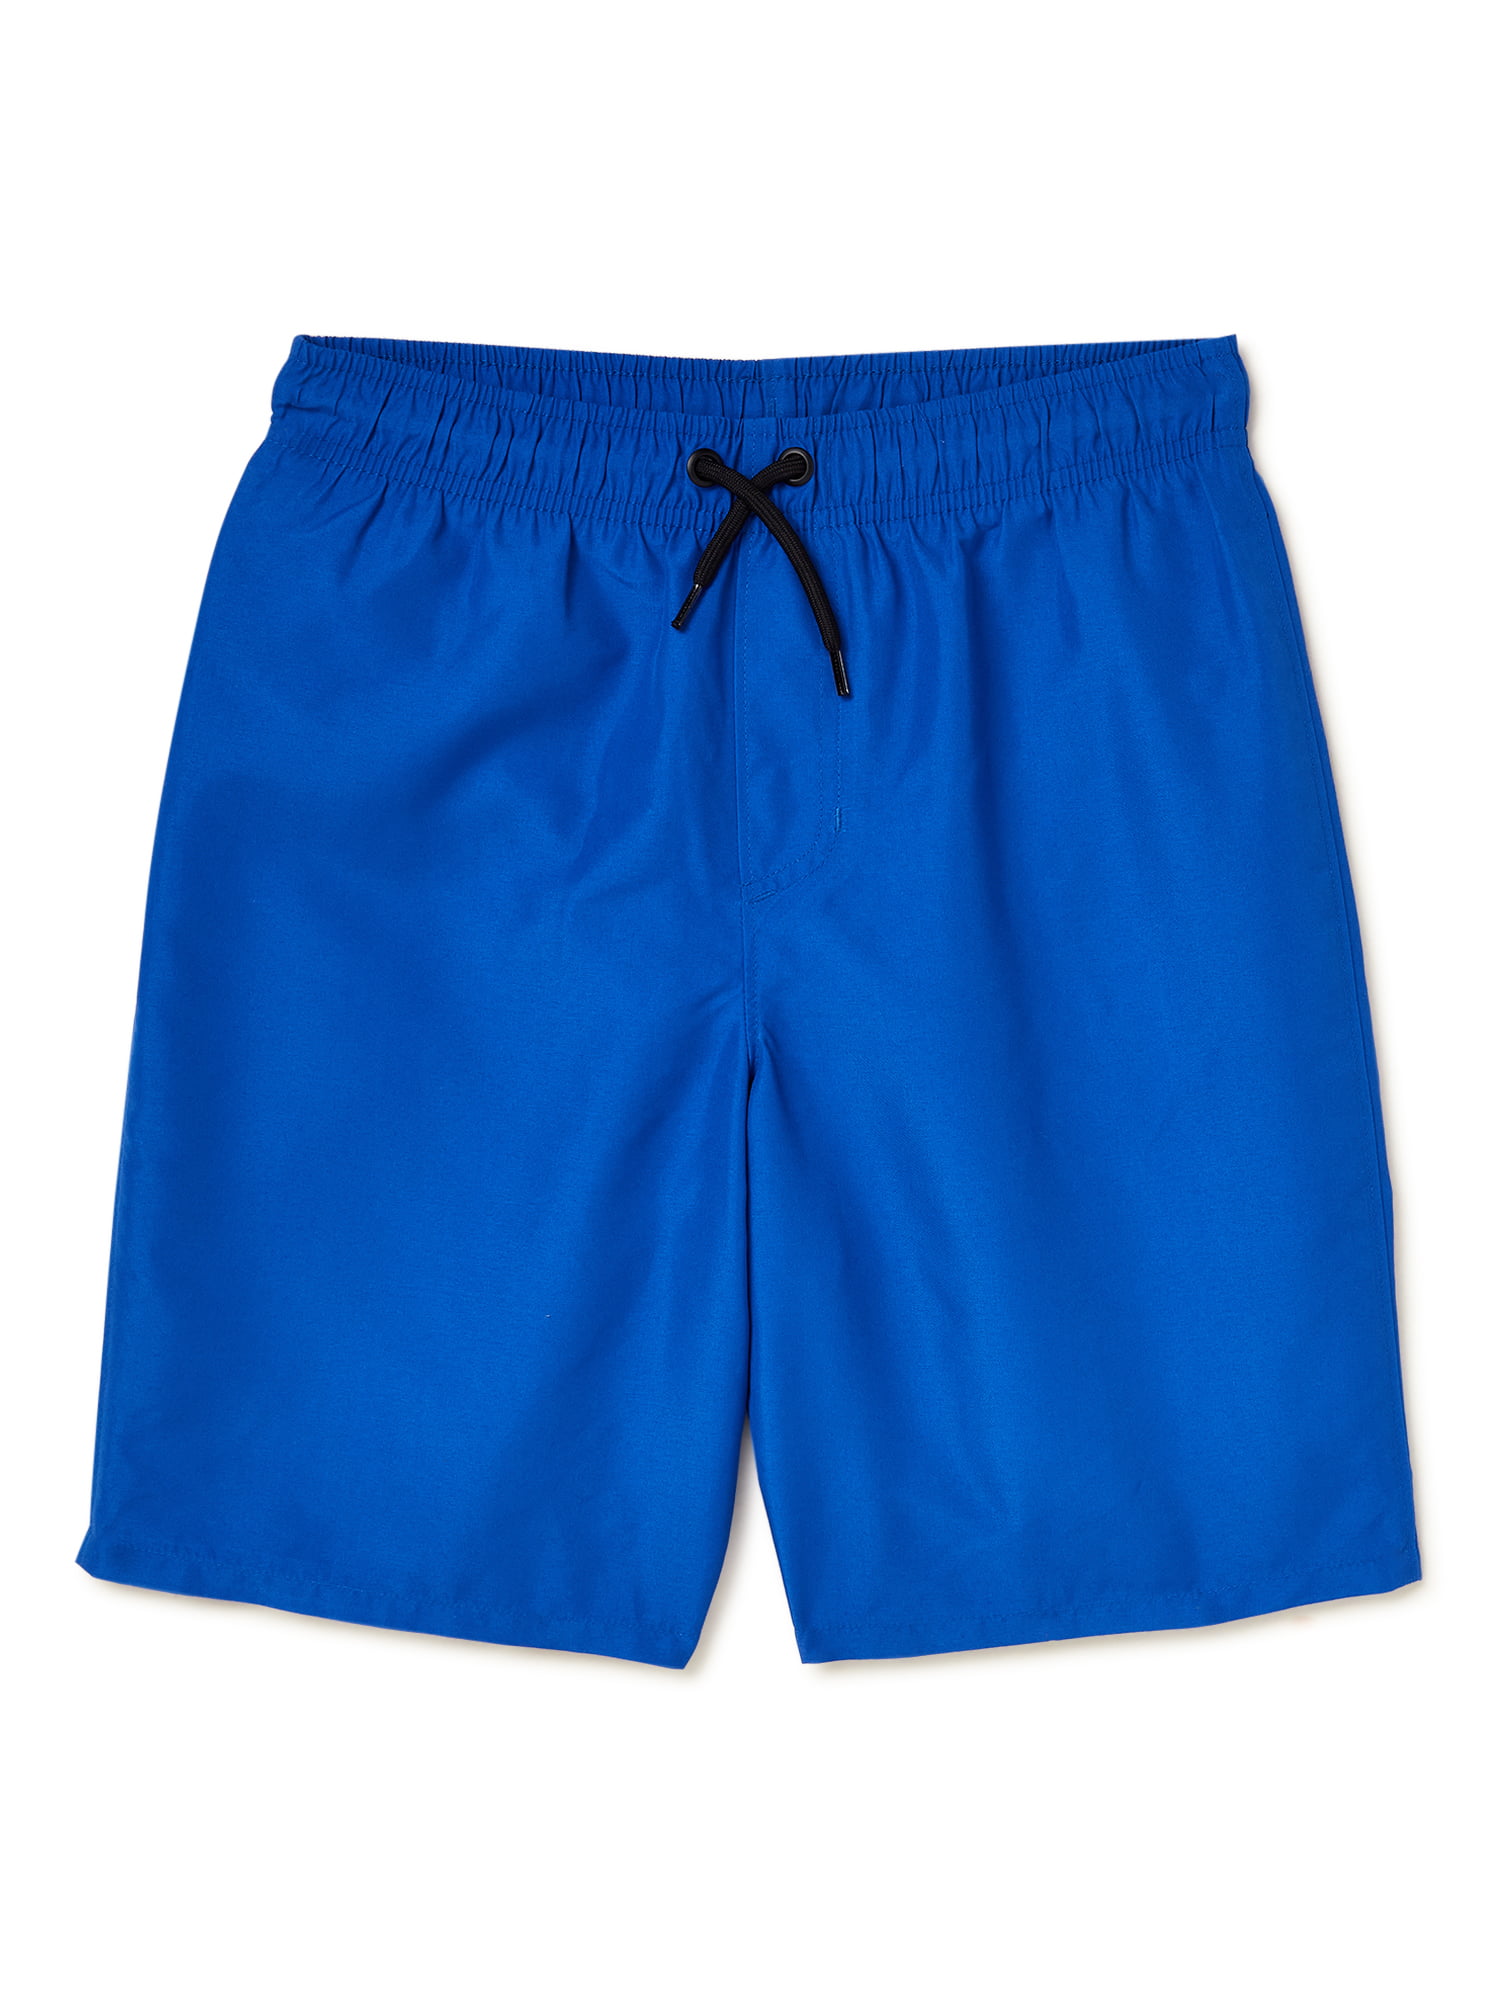 Wonder Nation Boys Shorts, Sizes 4-16 & Husky - Walmart.com